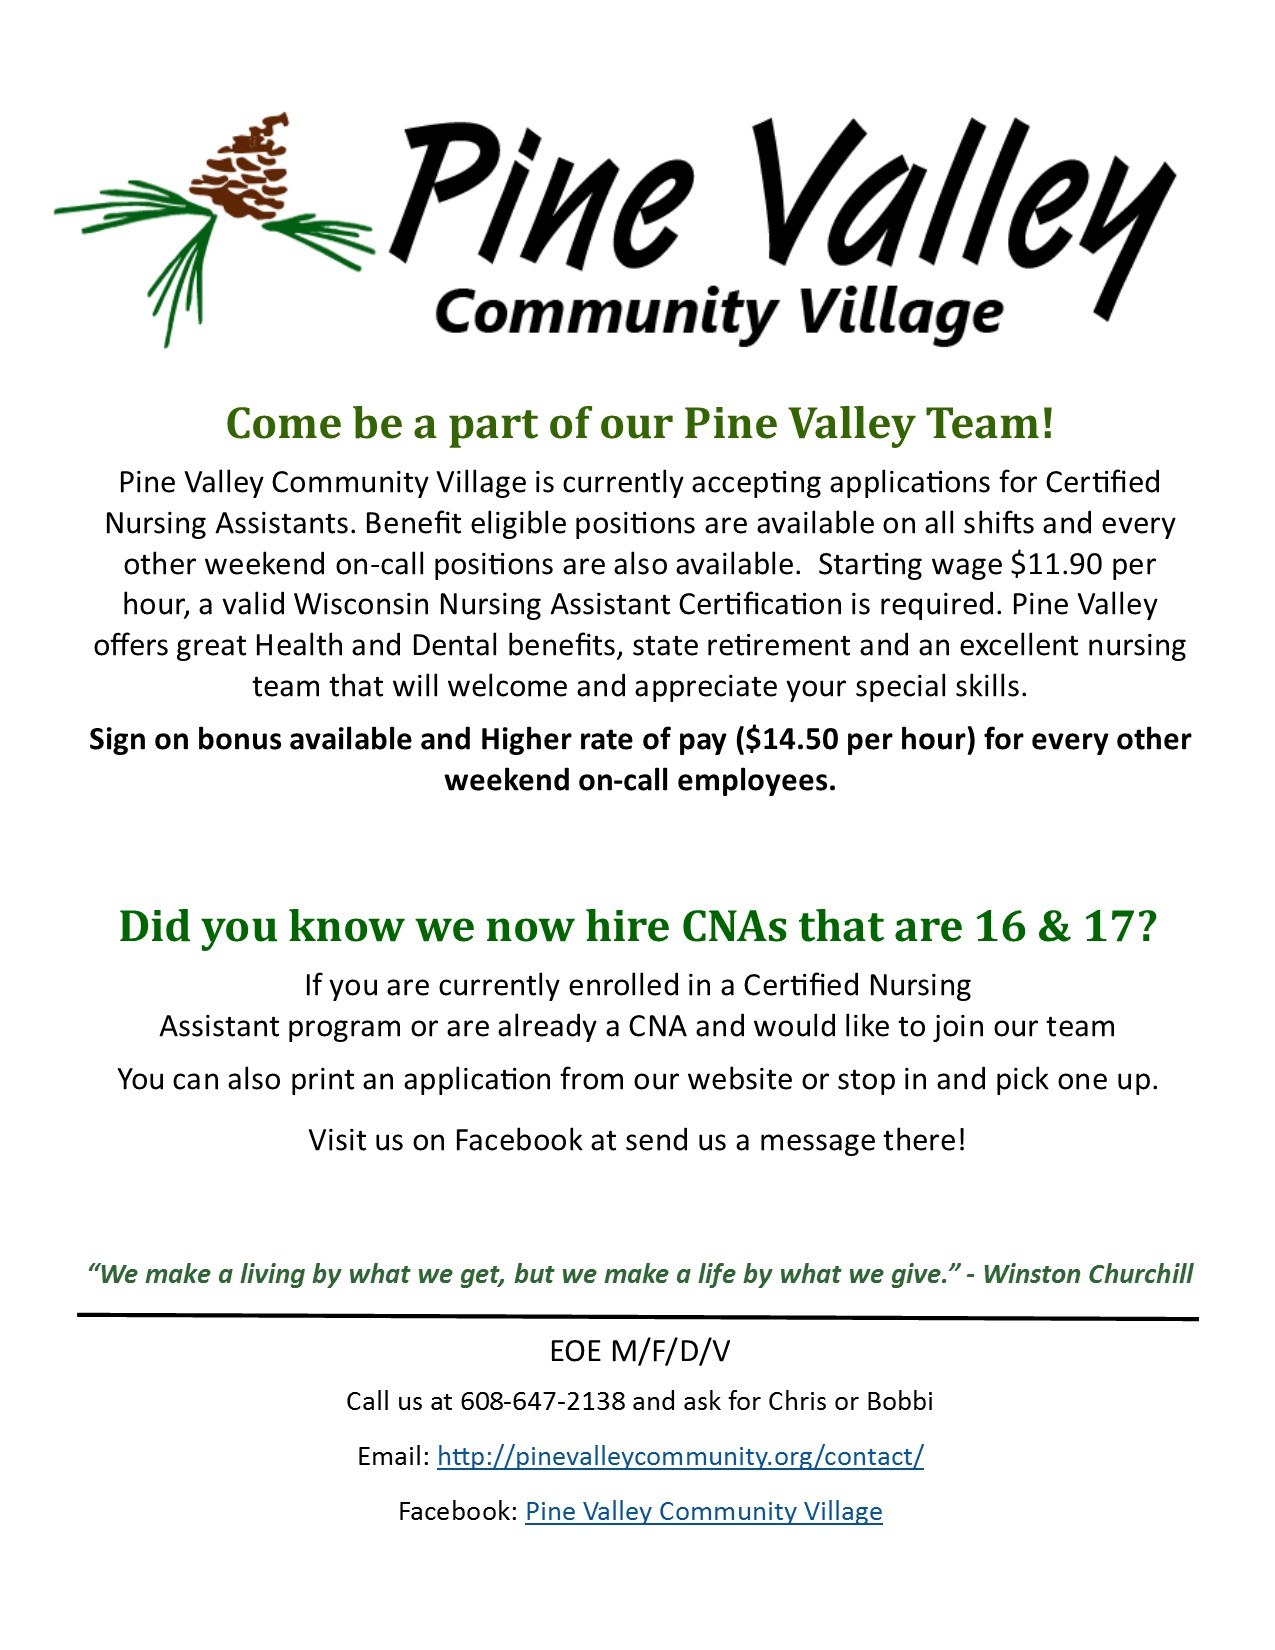 CNA AD - Pine Valley Community Village